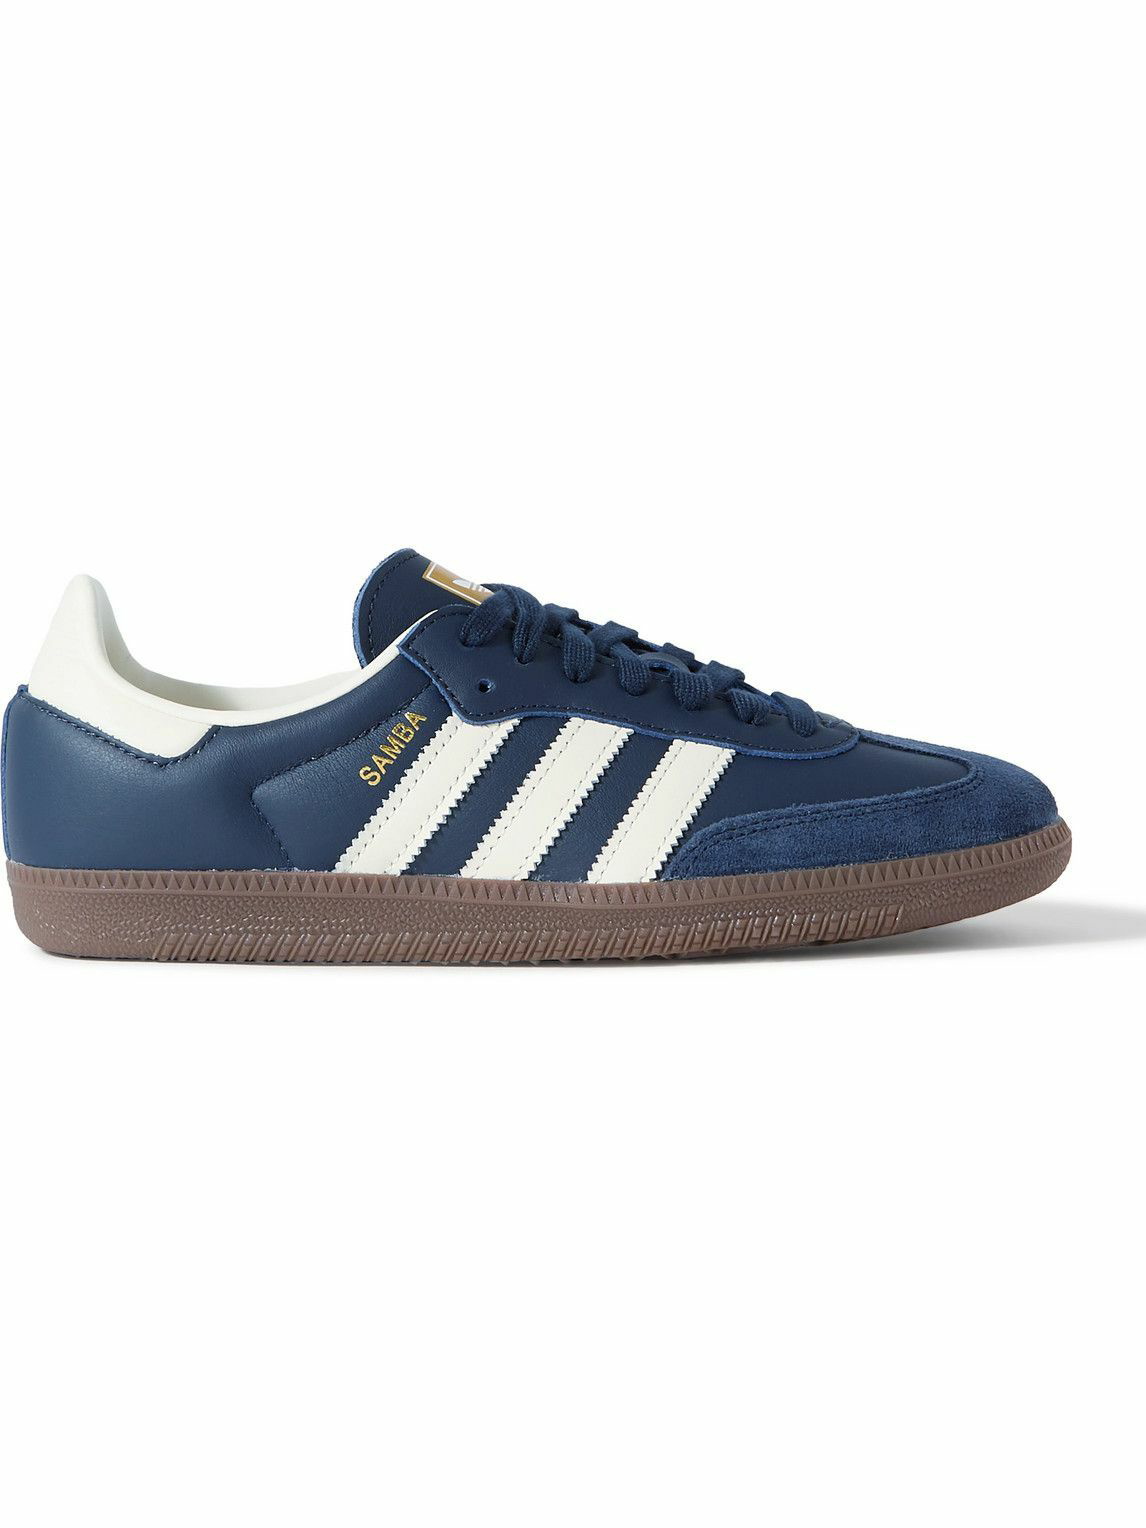 adidas Originals - Samba OG Suede-Trimmed Leather Sneakers - Blue ...